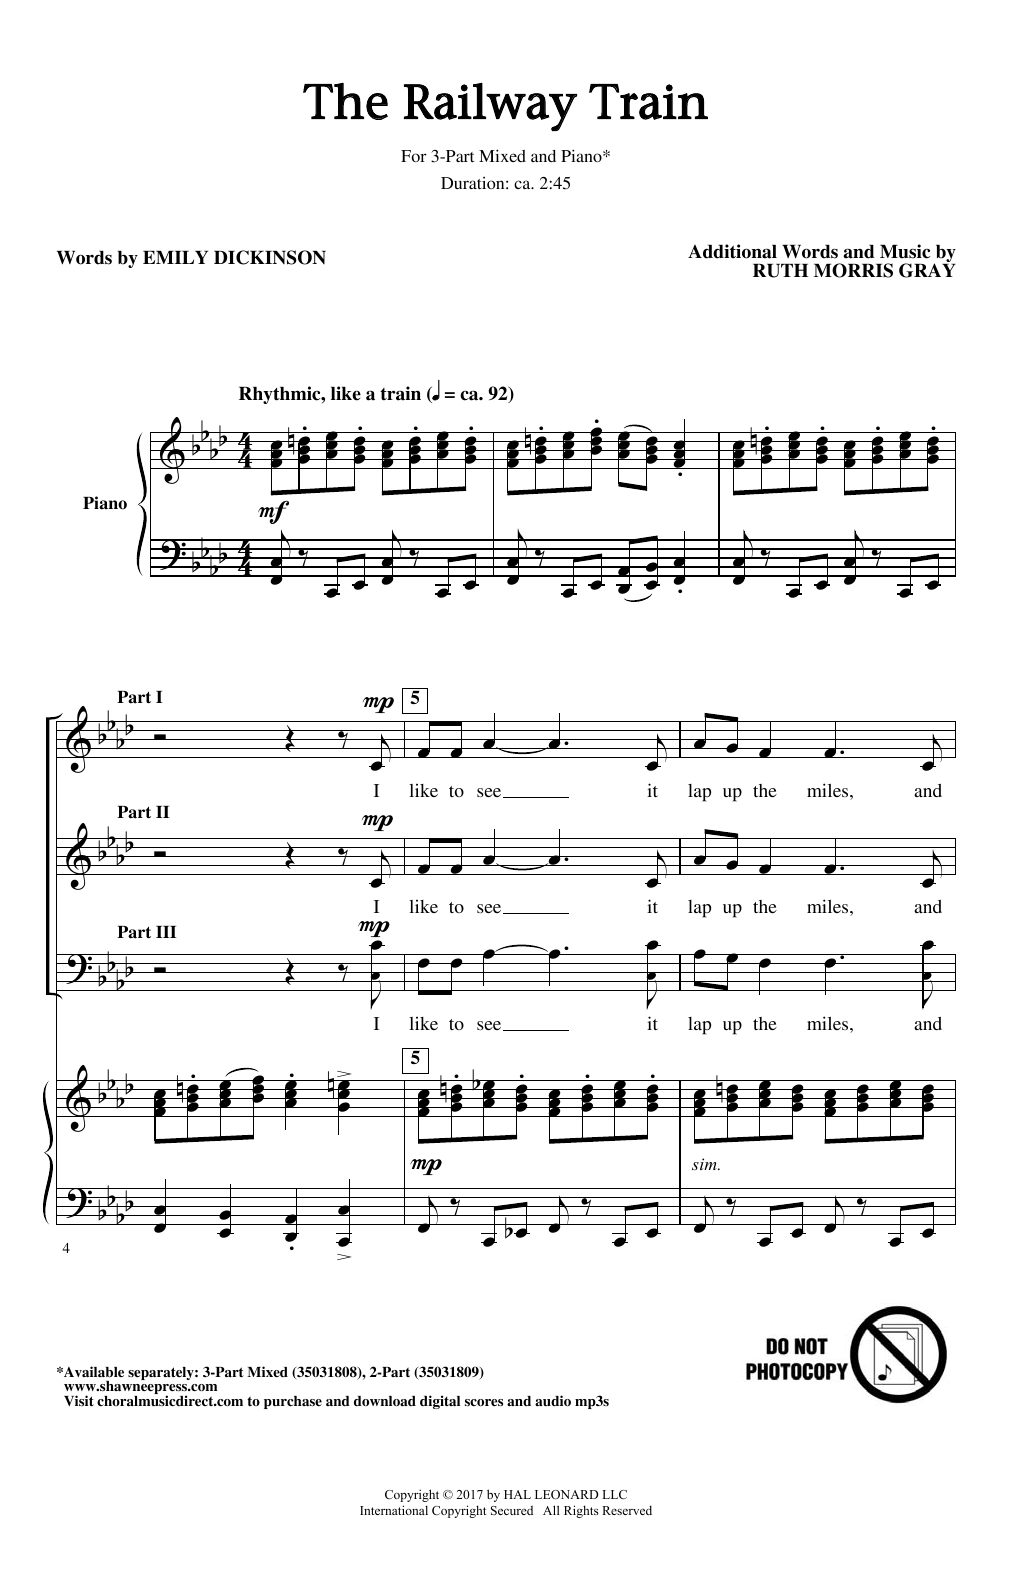 Ruth Morris Gray The Railway Train Sheet Music Notes & Chords for 2-Part Choir - Download or Print PDF